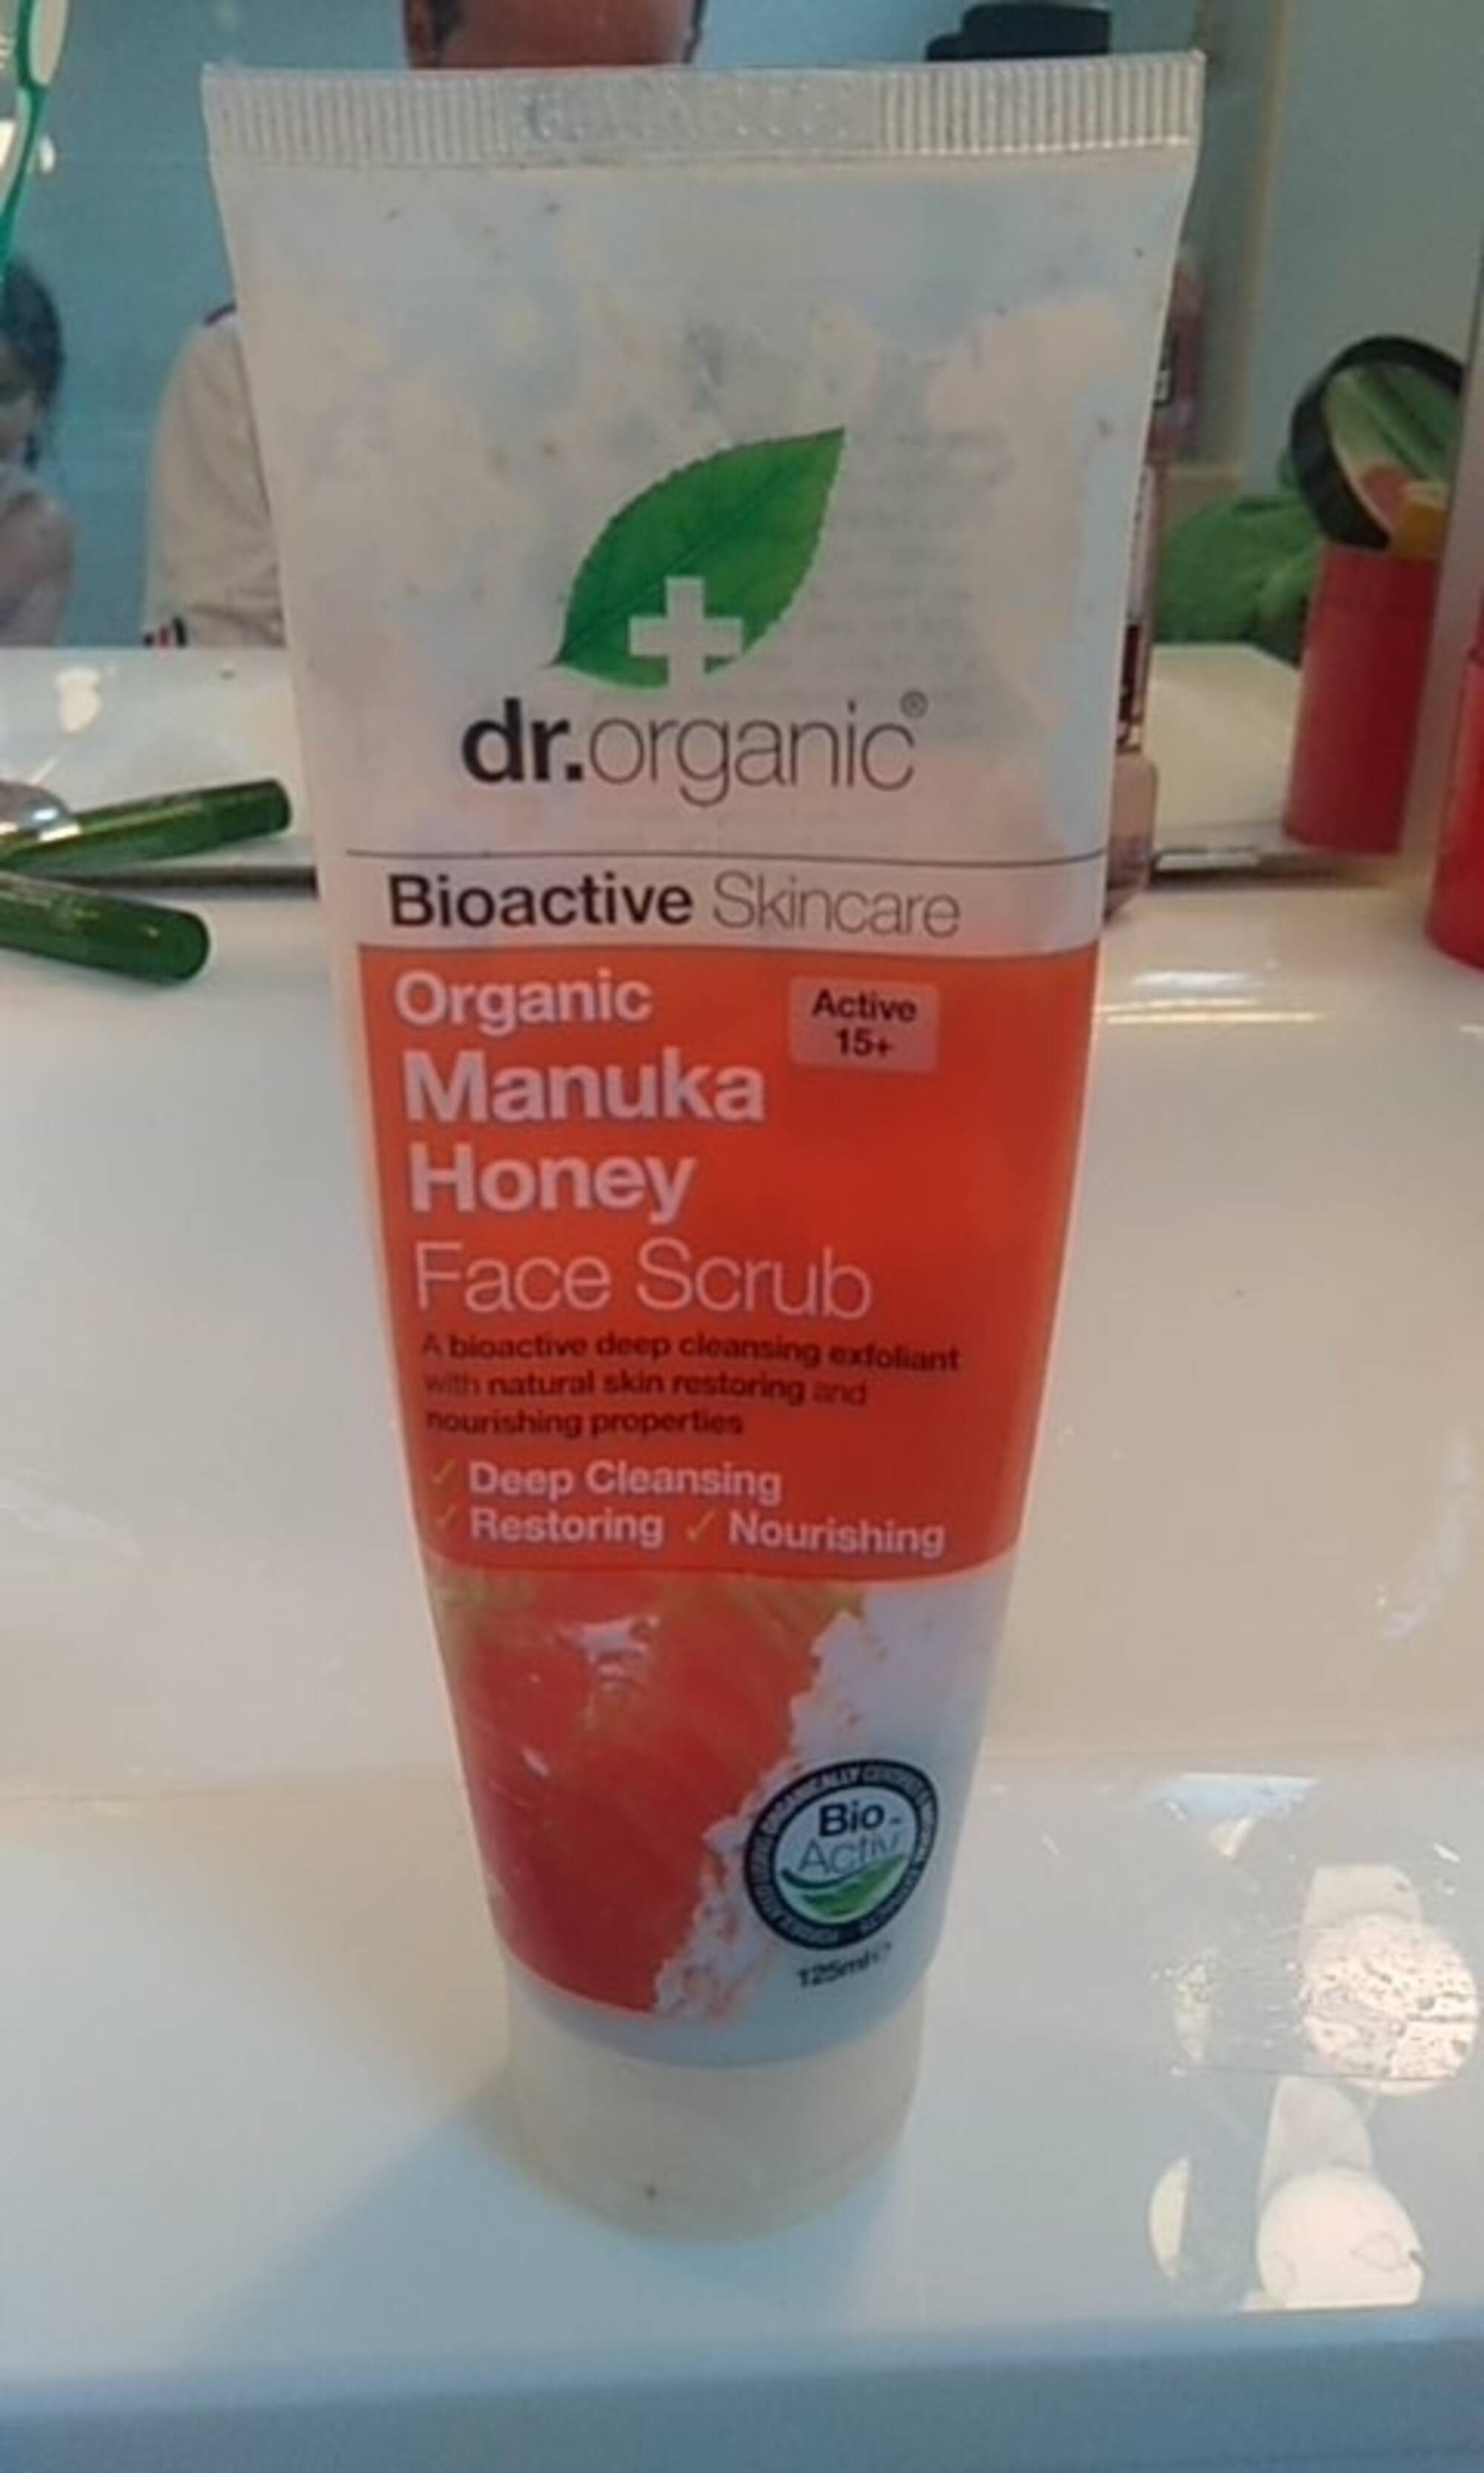 DR. ORGANIC - Organic - Manuka honey face scrub